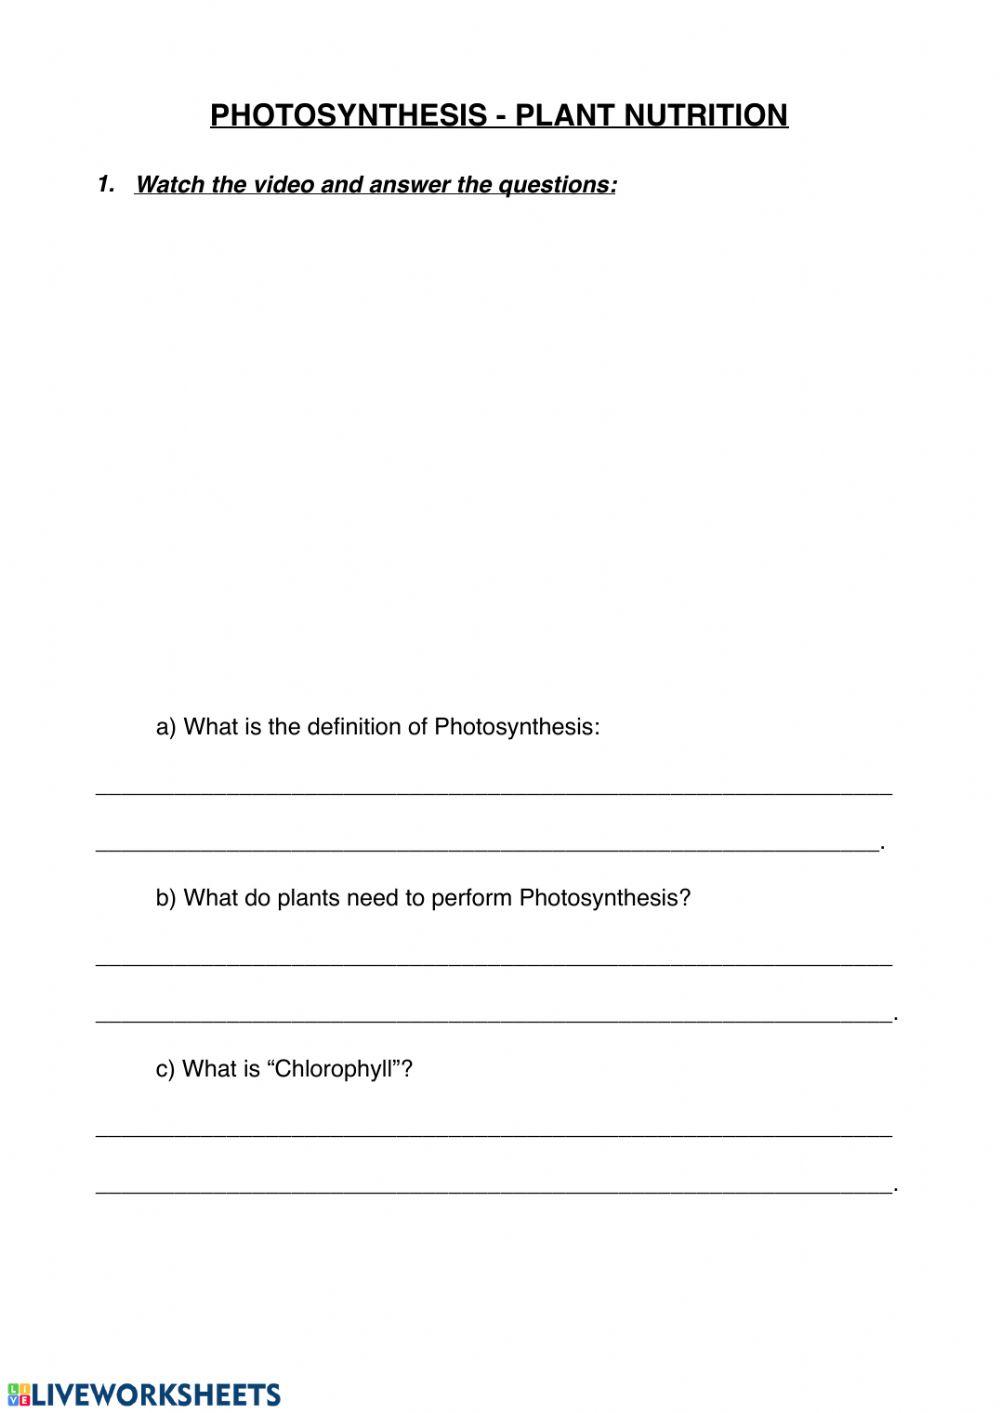 Photsynthesis